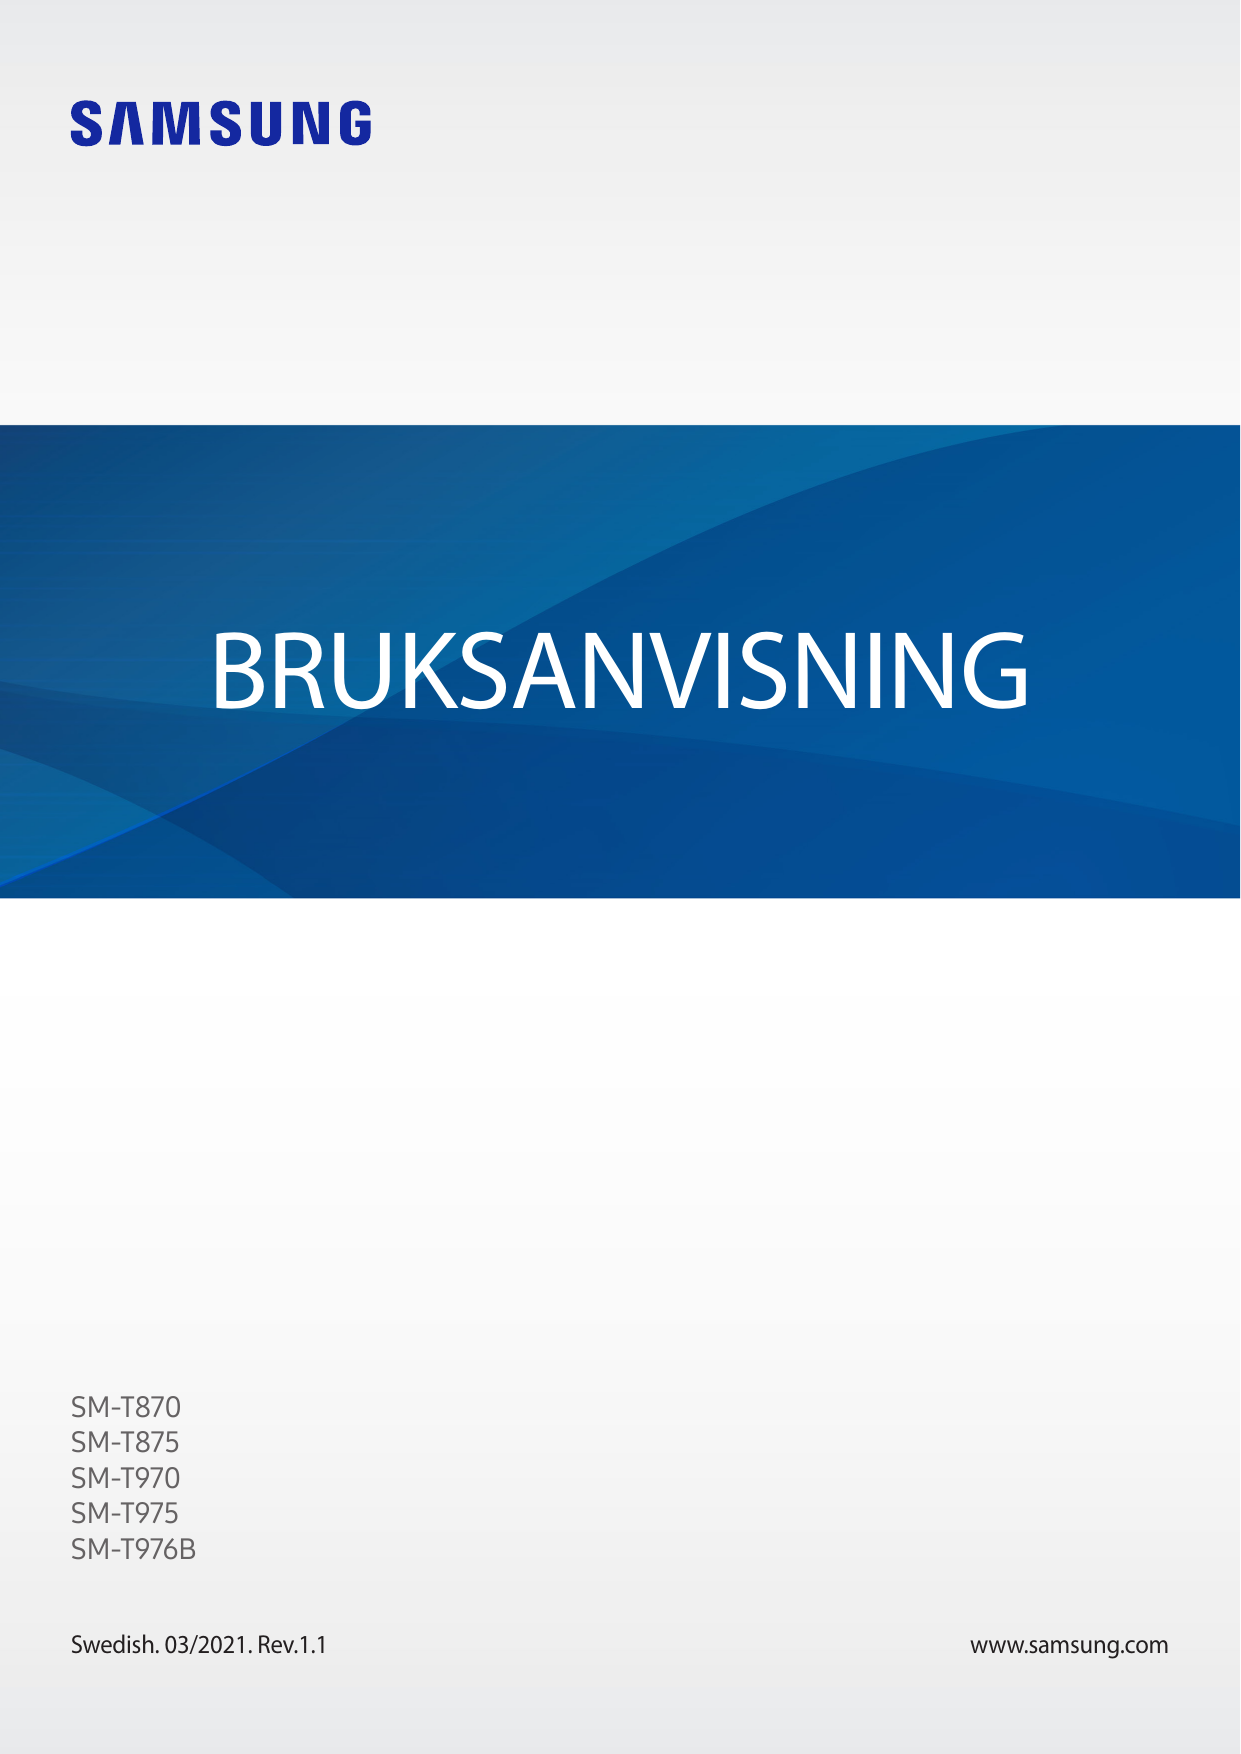 BRUKSANVISNINGSM-T870SM-T875SM-T970SM-T975SM-T976BSwedish. 03/2021. Rev.1.1www.samsung.com